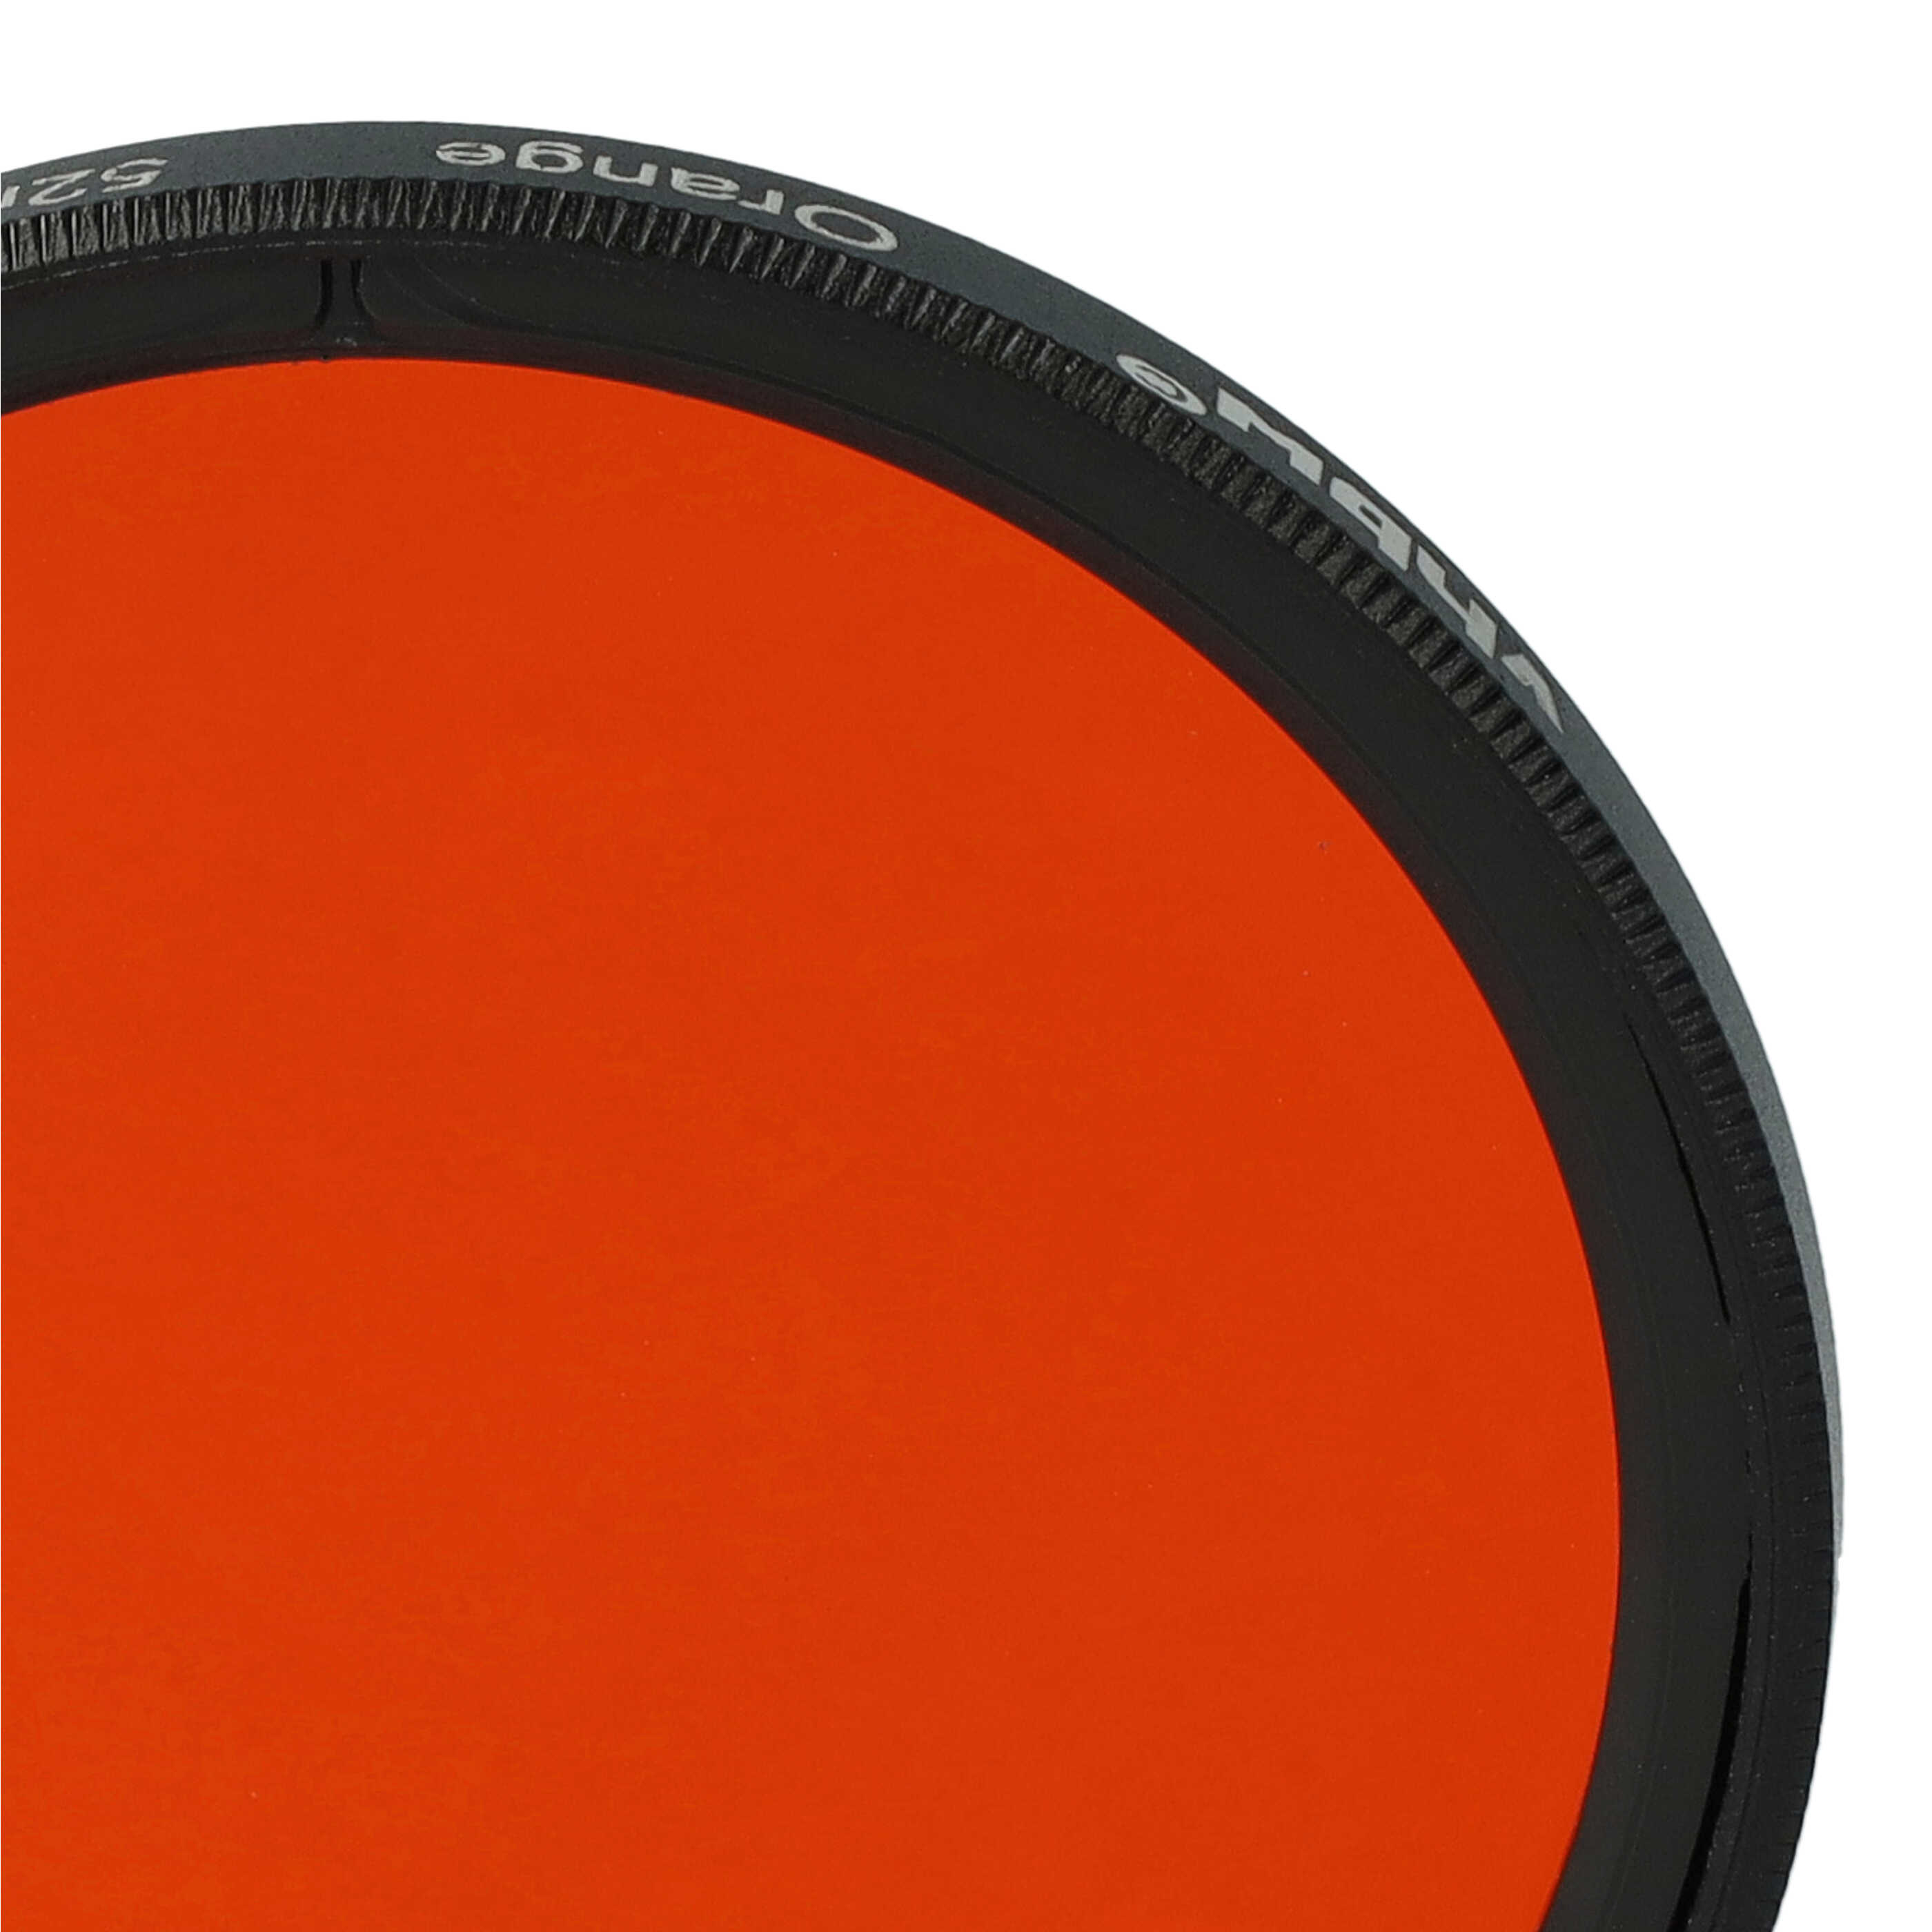 Coloured Filter, Orange suitable for Camera Lenses with 52 mm Filter Thread - Orange Filter